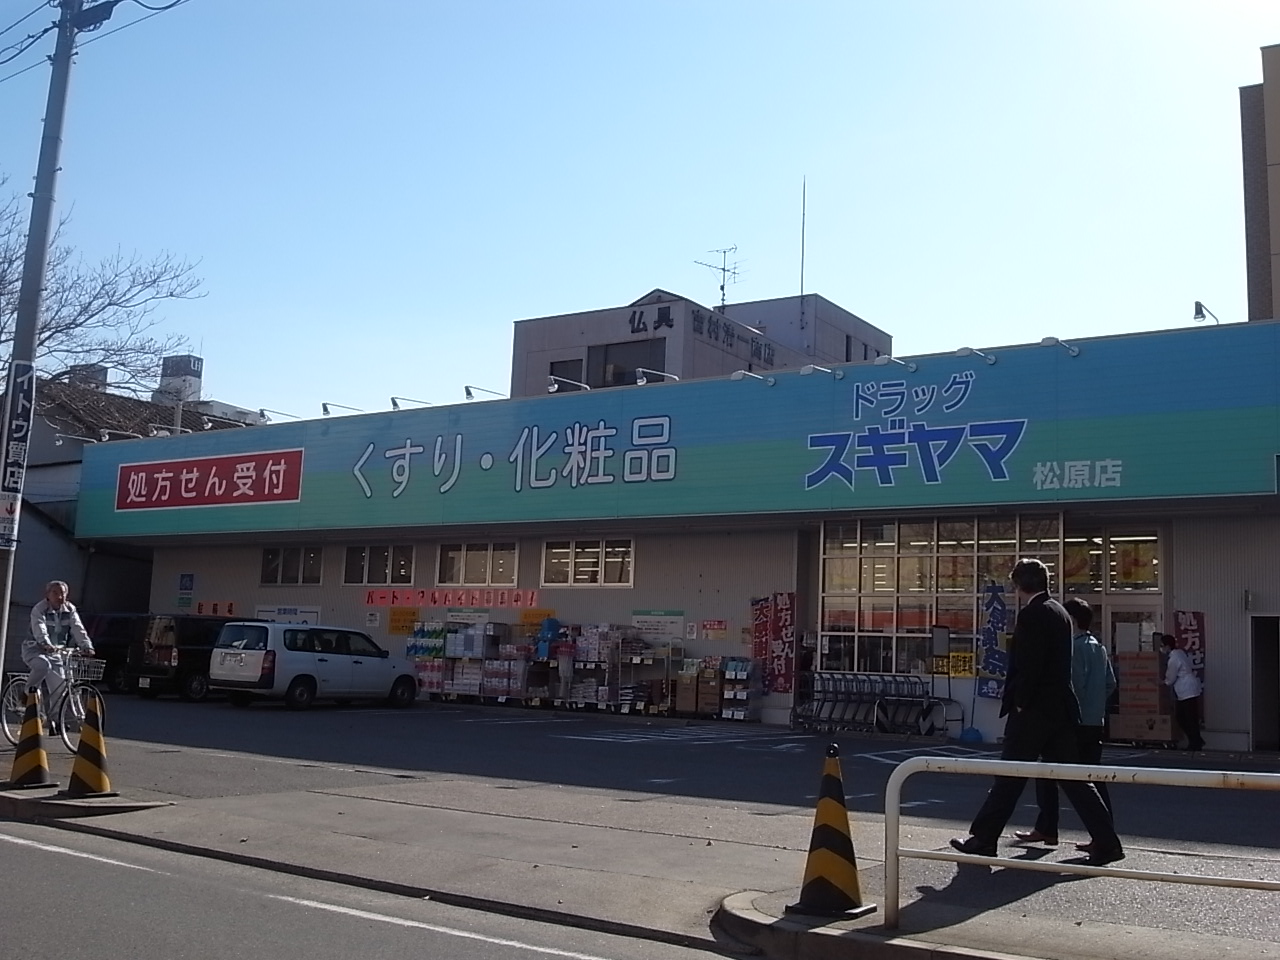 Dorakkusutoa. Drag Sugiyama Matsubara store (drugstore) to 400m